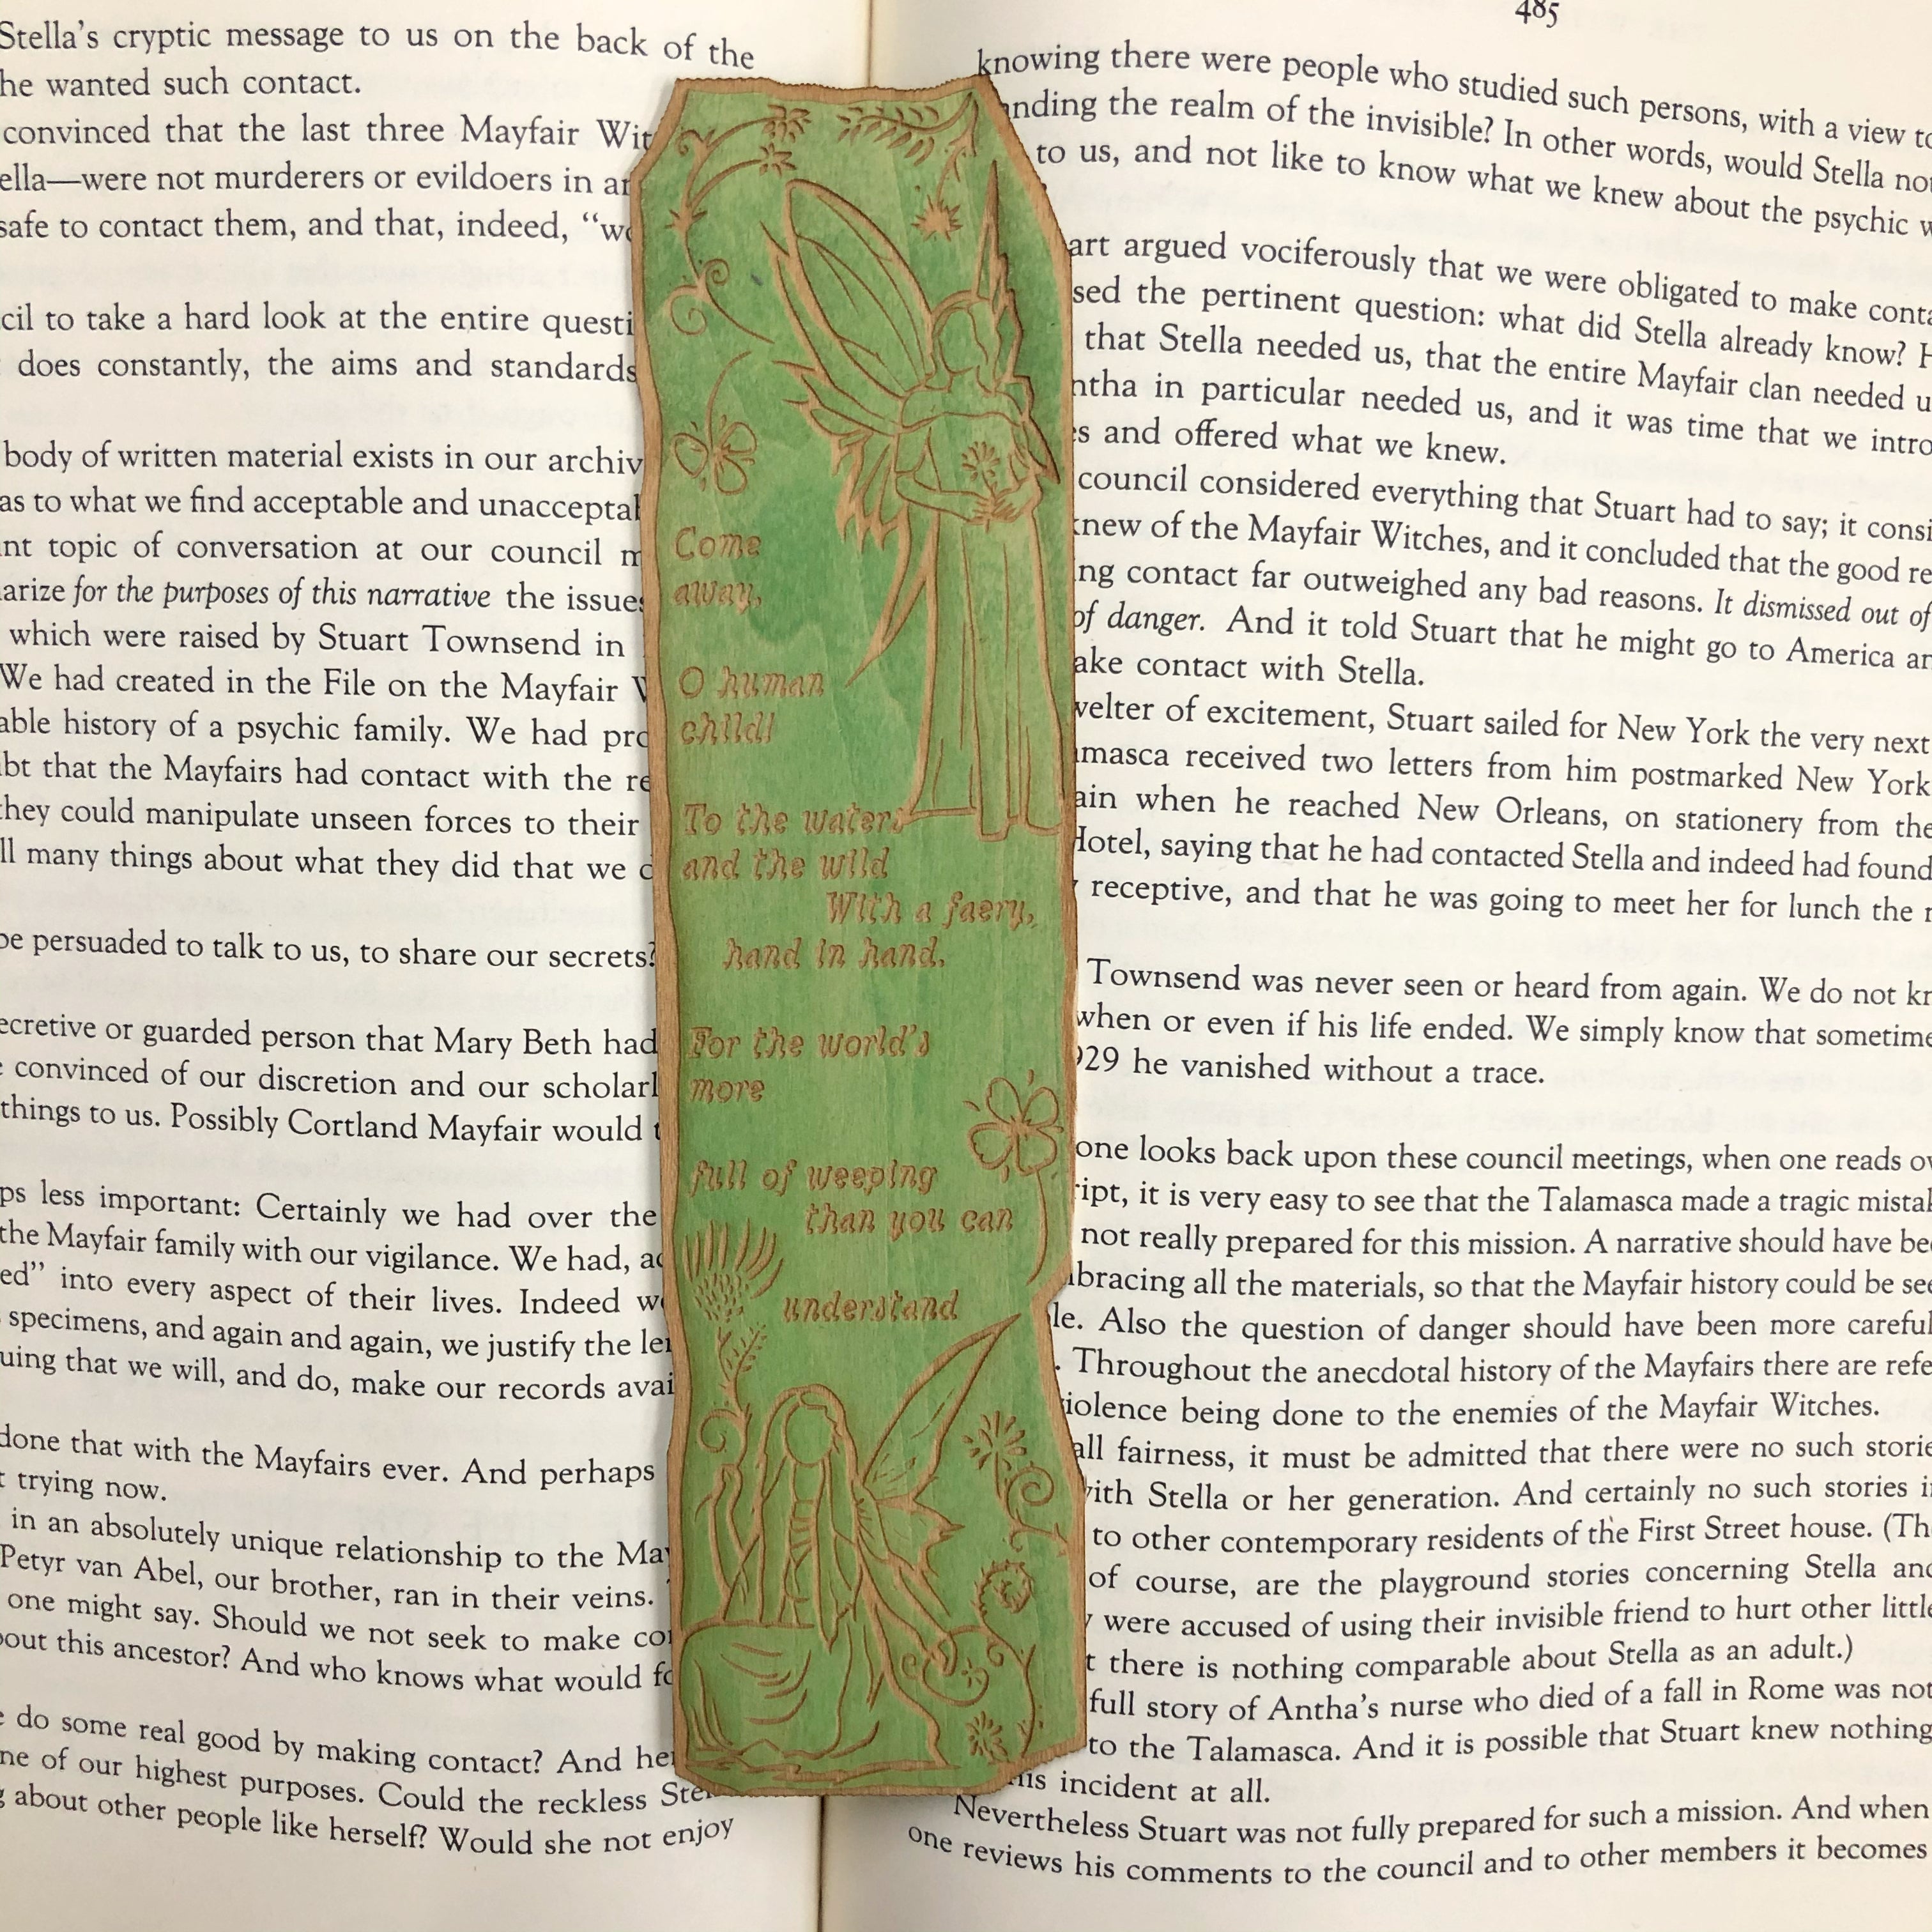 Fairy Wooden Bookmark